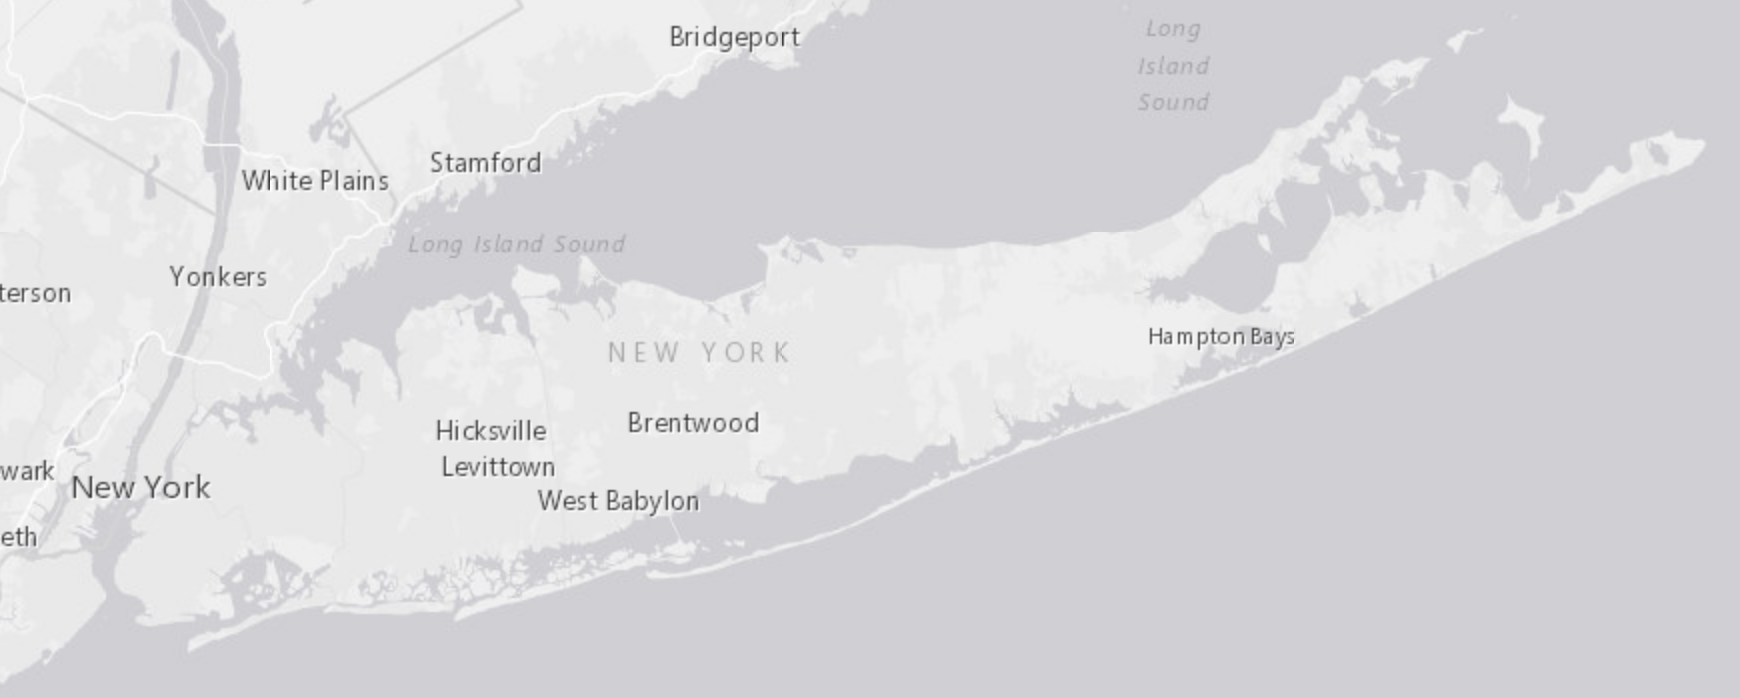 B&W map of Long Island